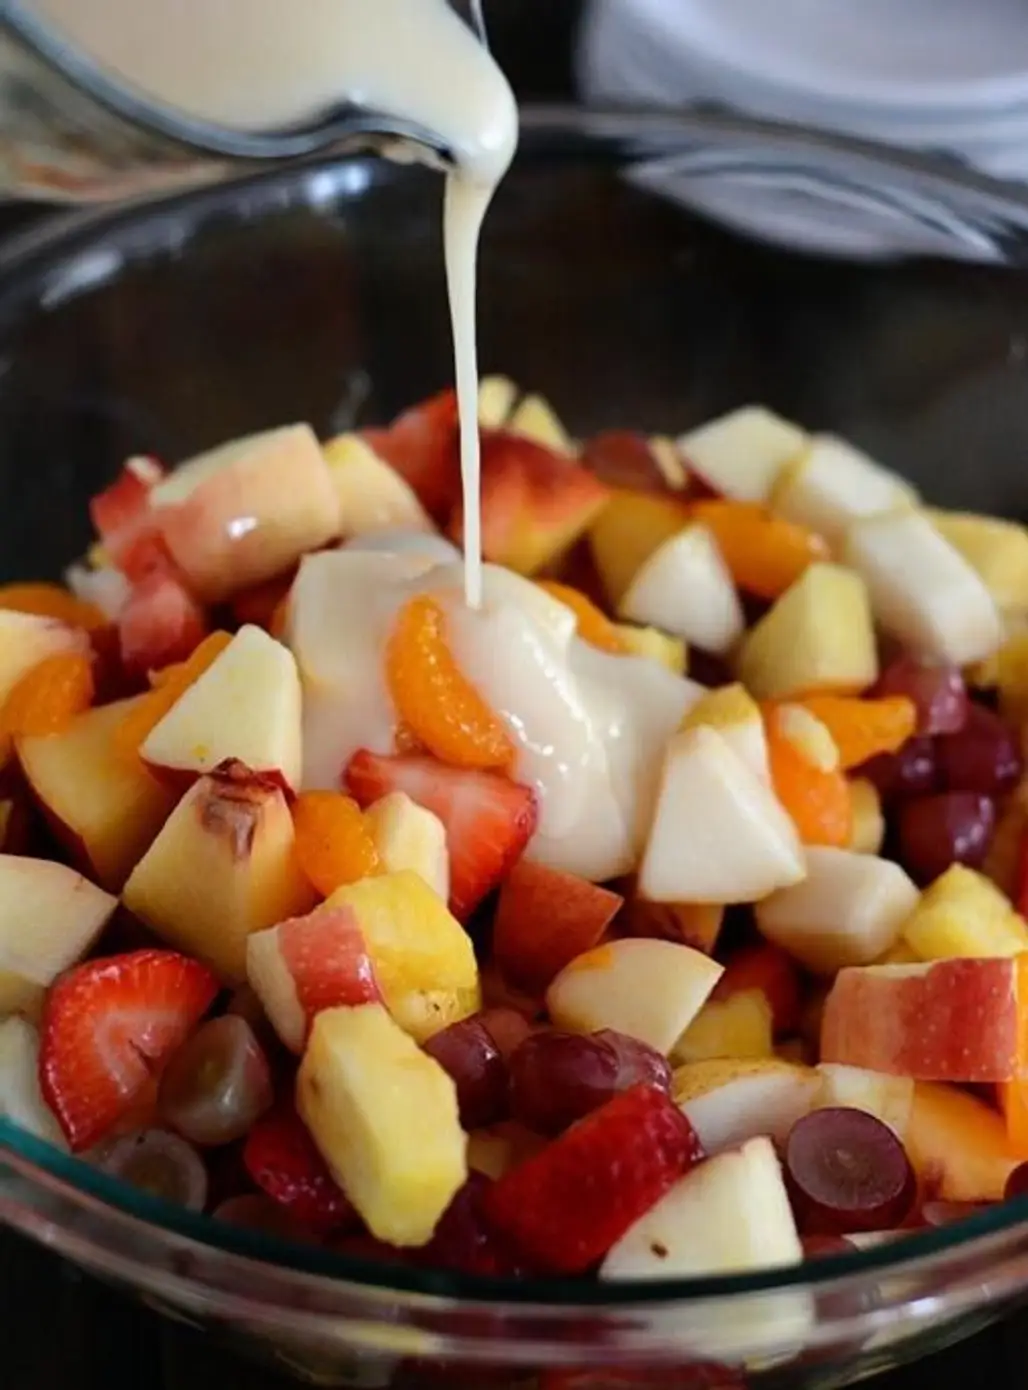 Fruit Salad with Creamy Glazed Dressing